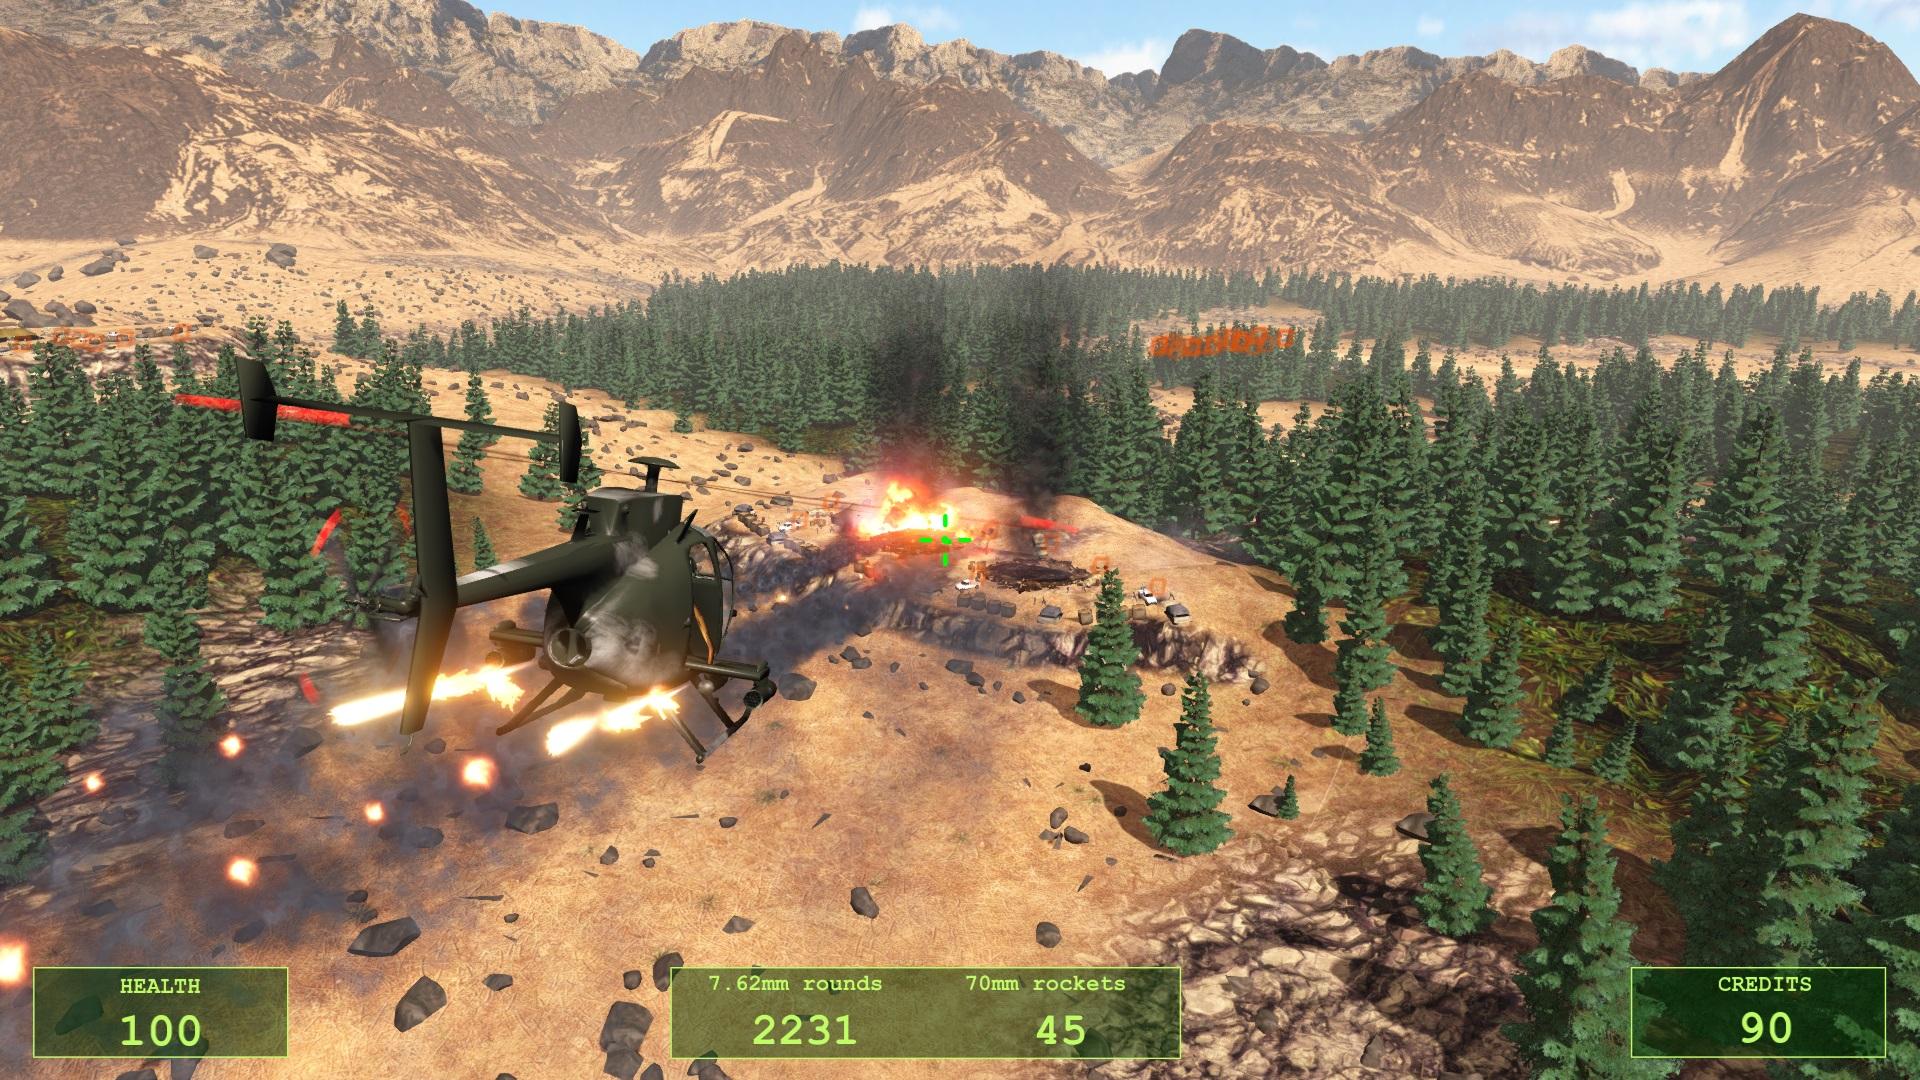 Screenshot №10 from game Aerial Destruction